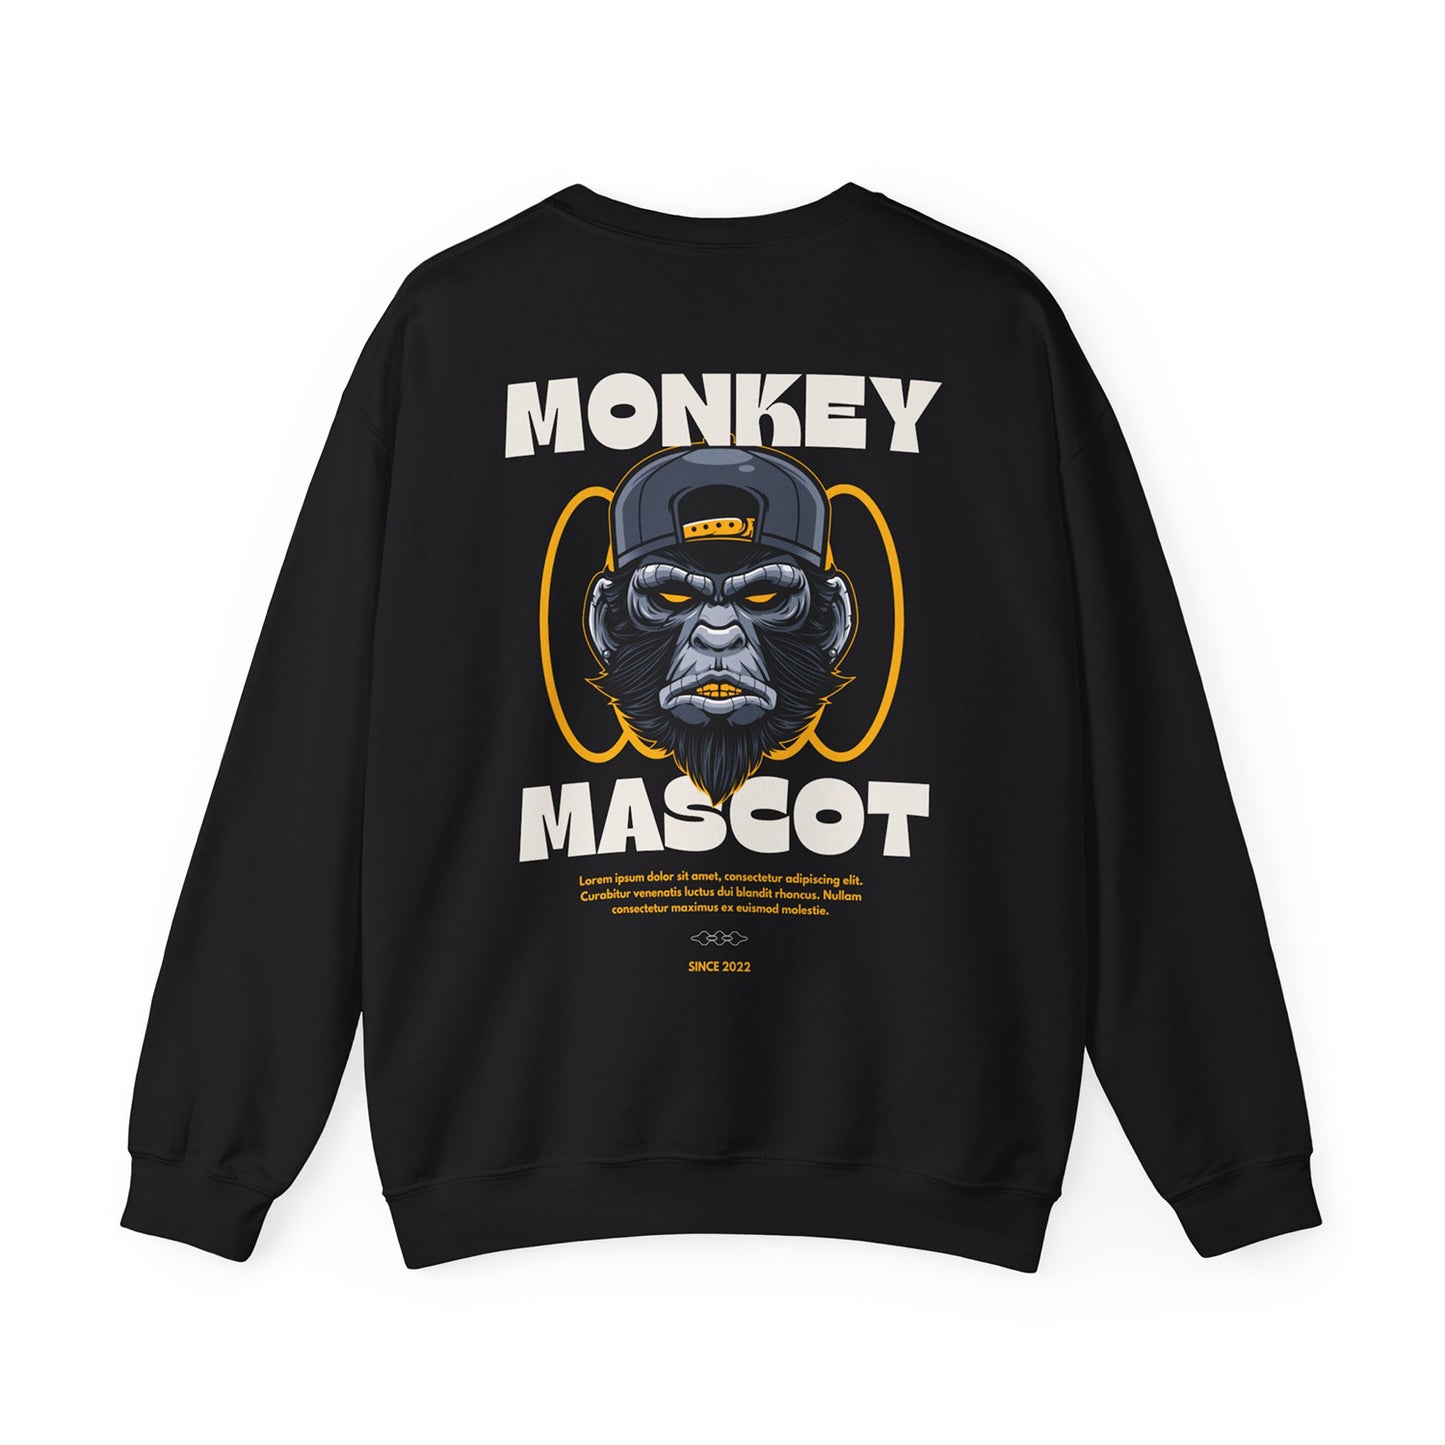 Monkey Mascot Sweatshirt for Men